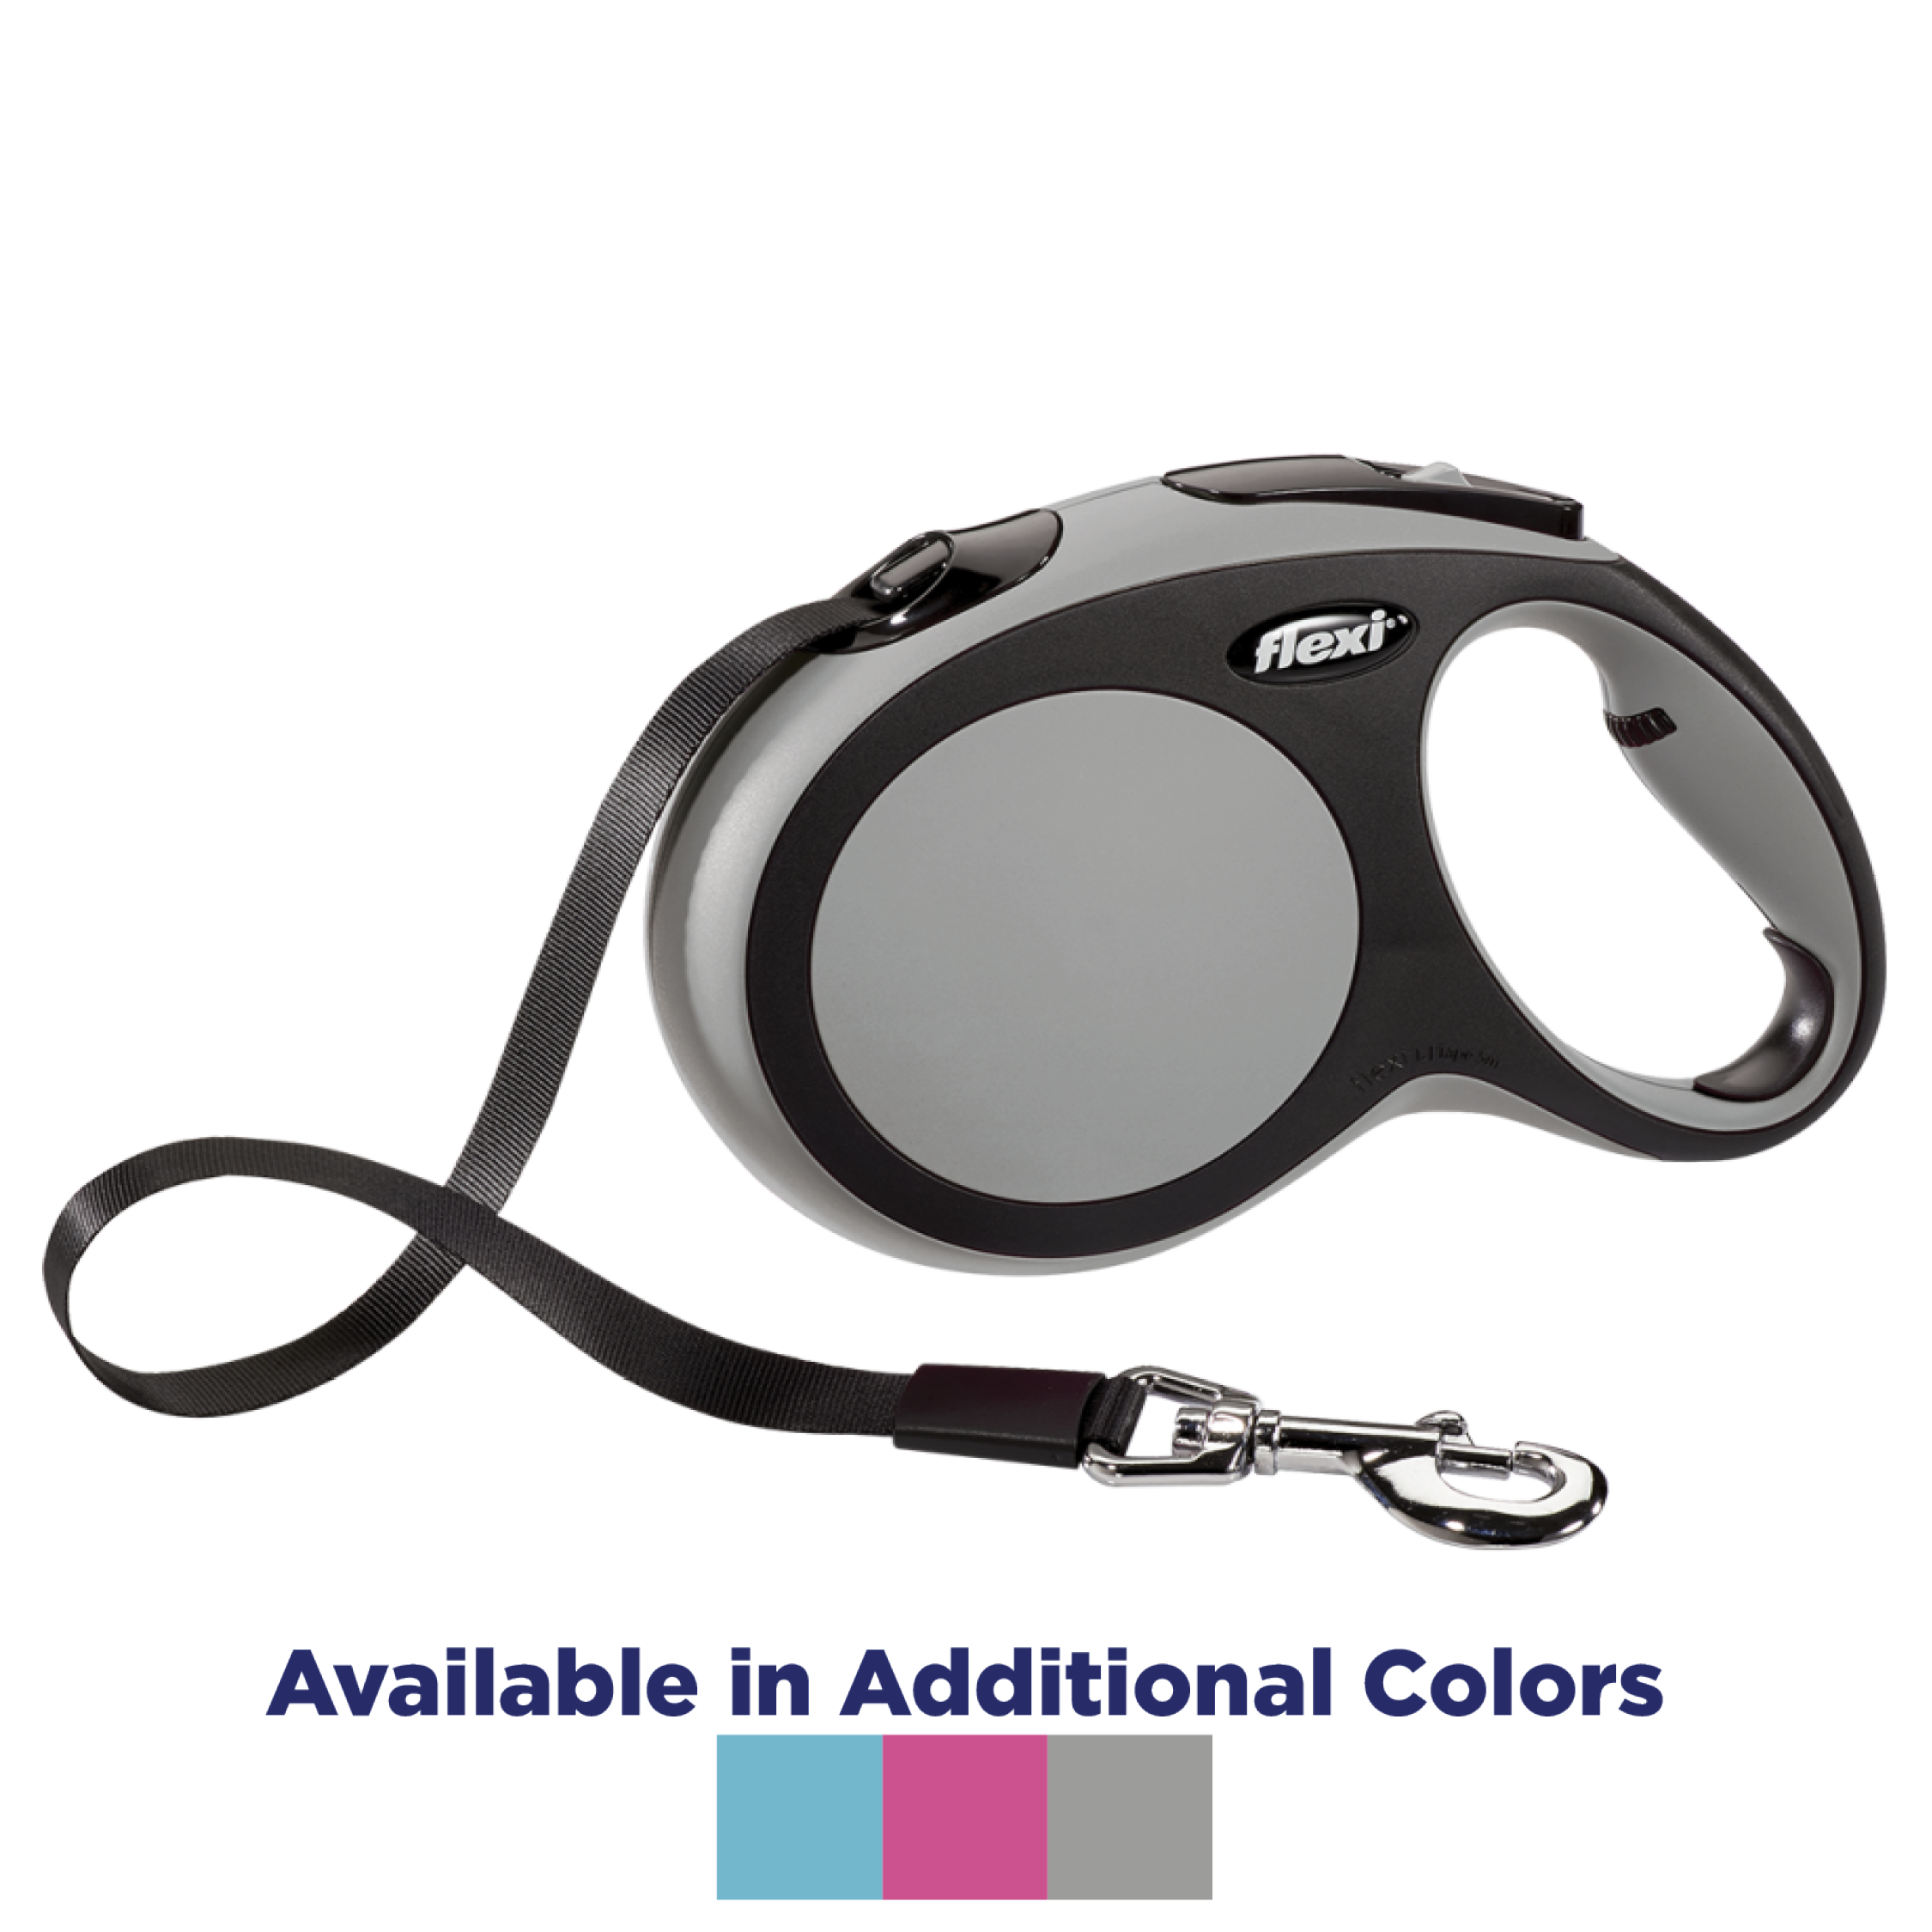 Flexi Comfort Retractable Dog Leash in Grey, Large 16